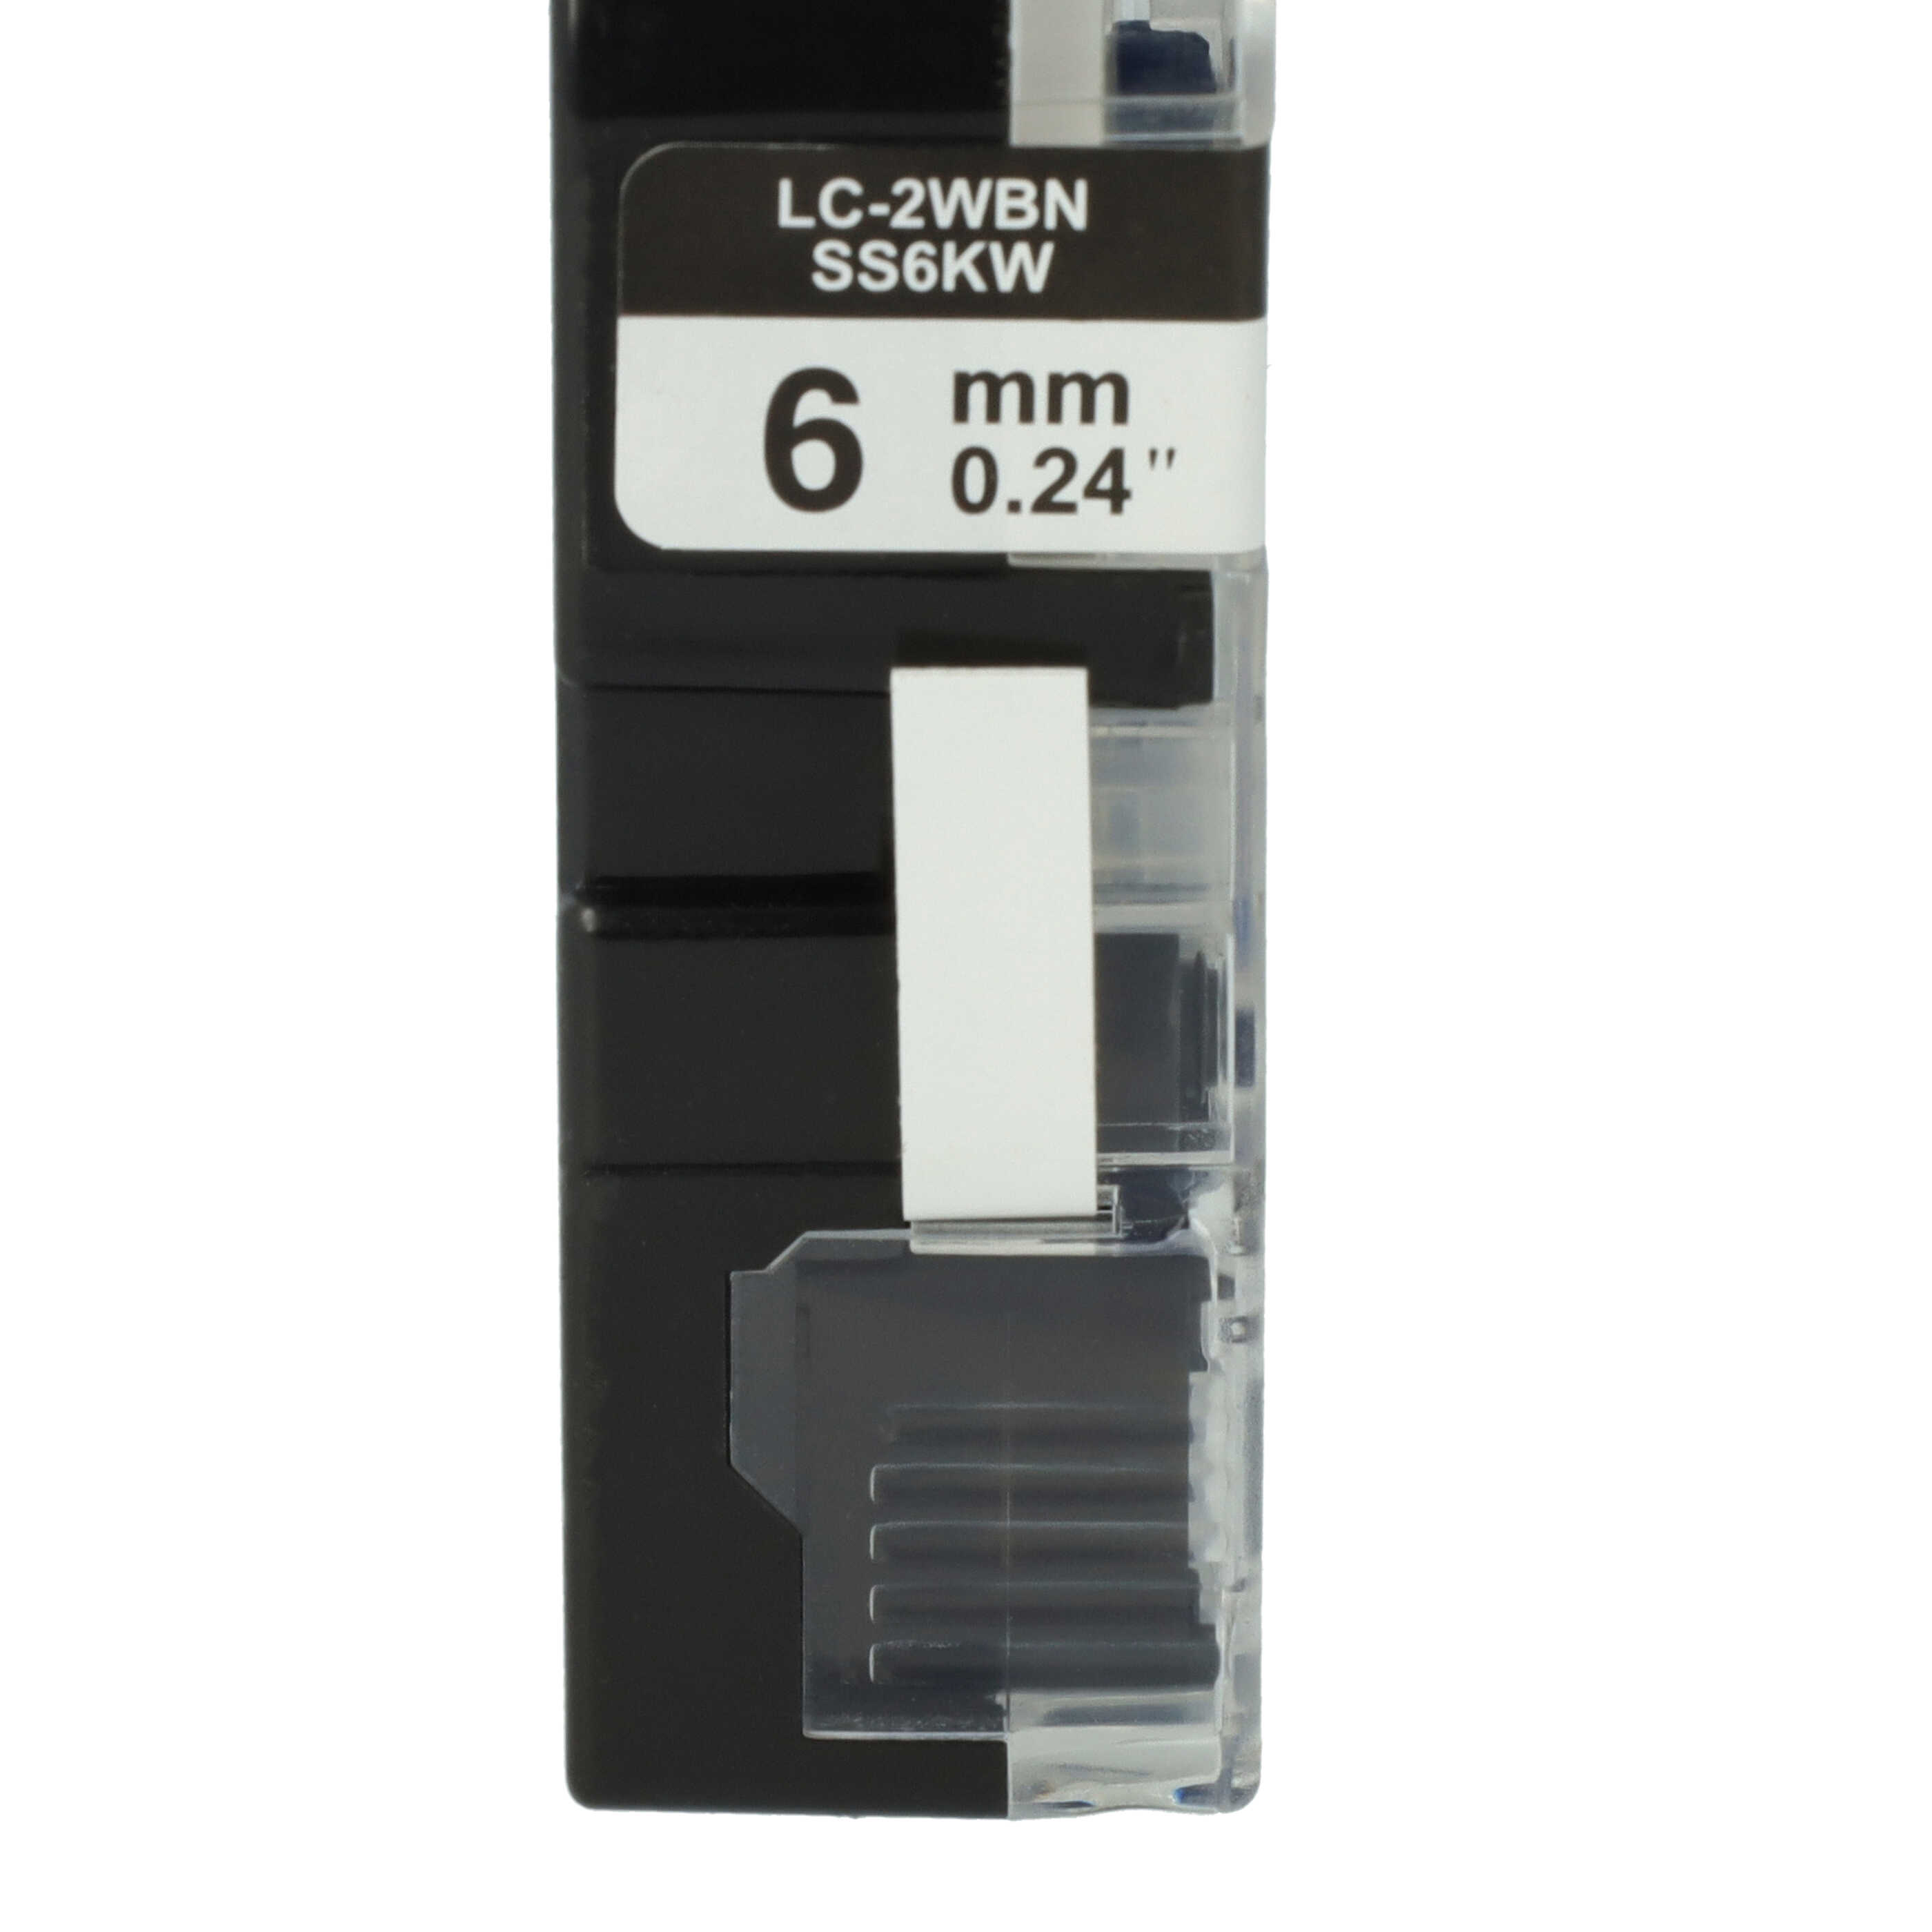 Casete cinta escritura reemplaza Epson LC-2WBN Negro su Blanco